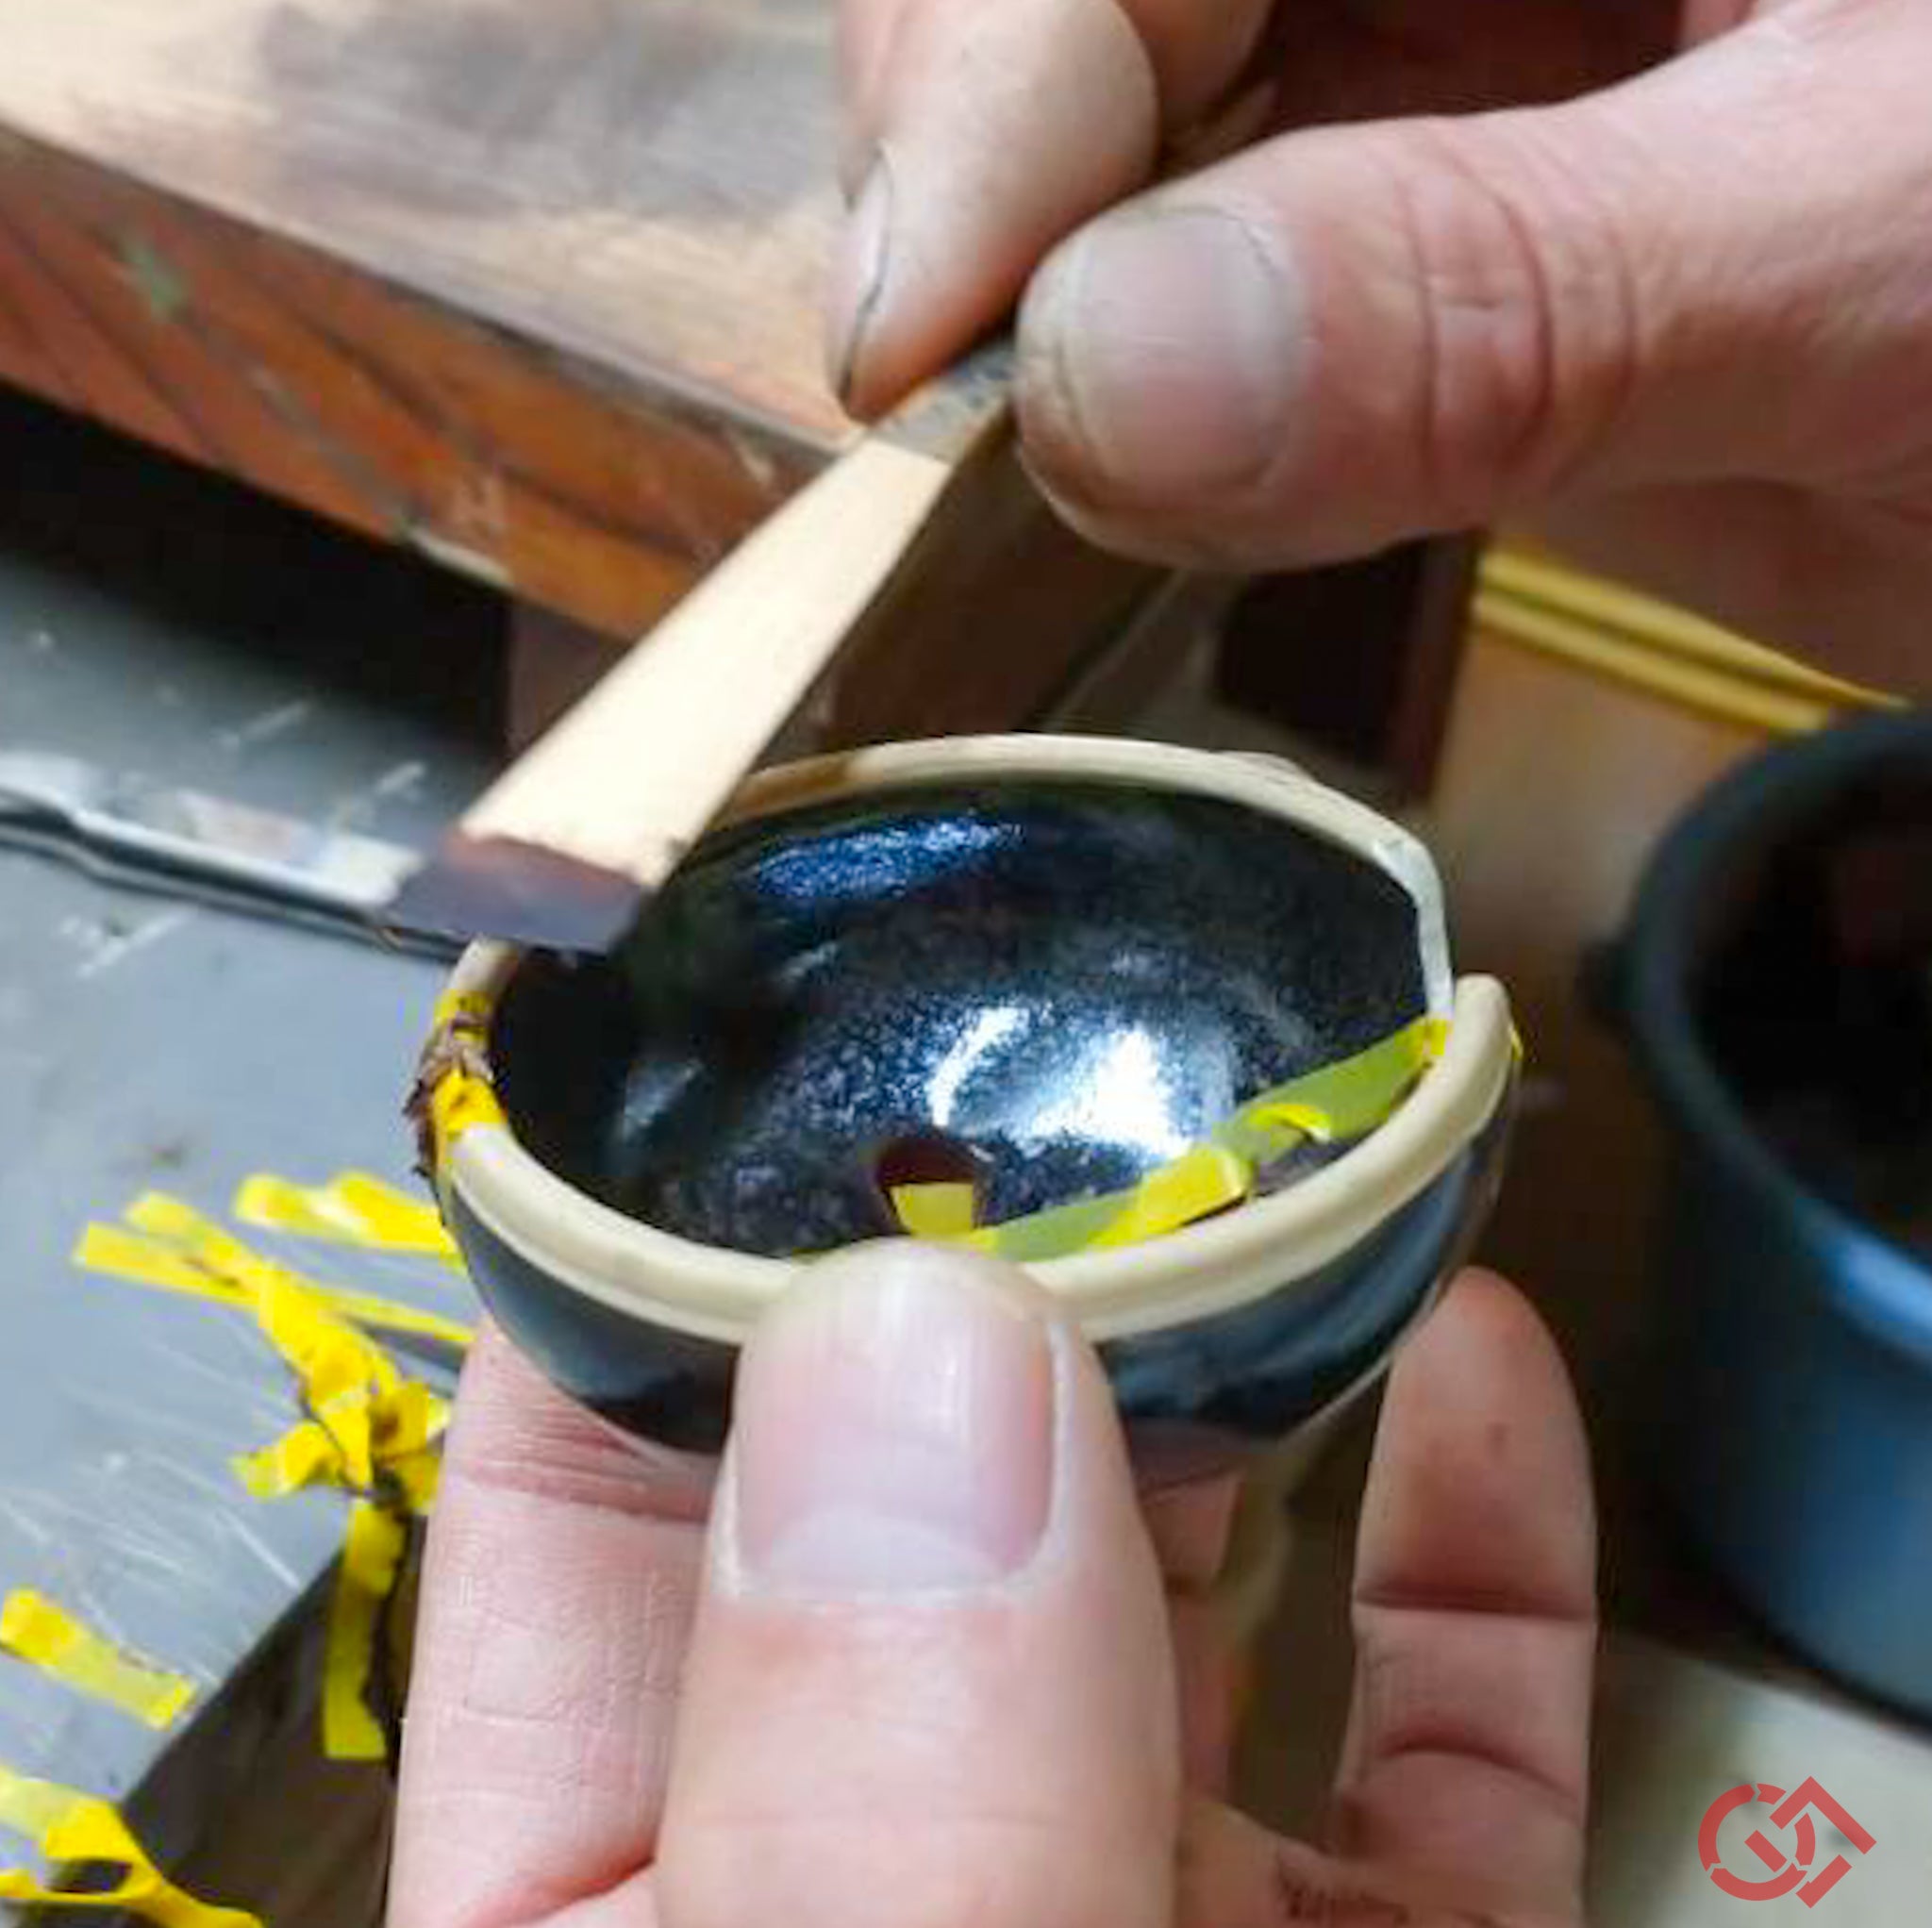 Traditional Kintsugi repair with urushi